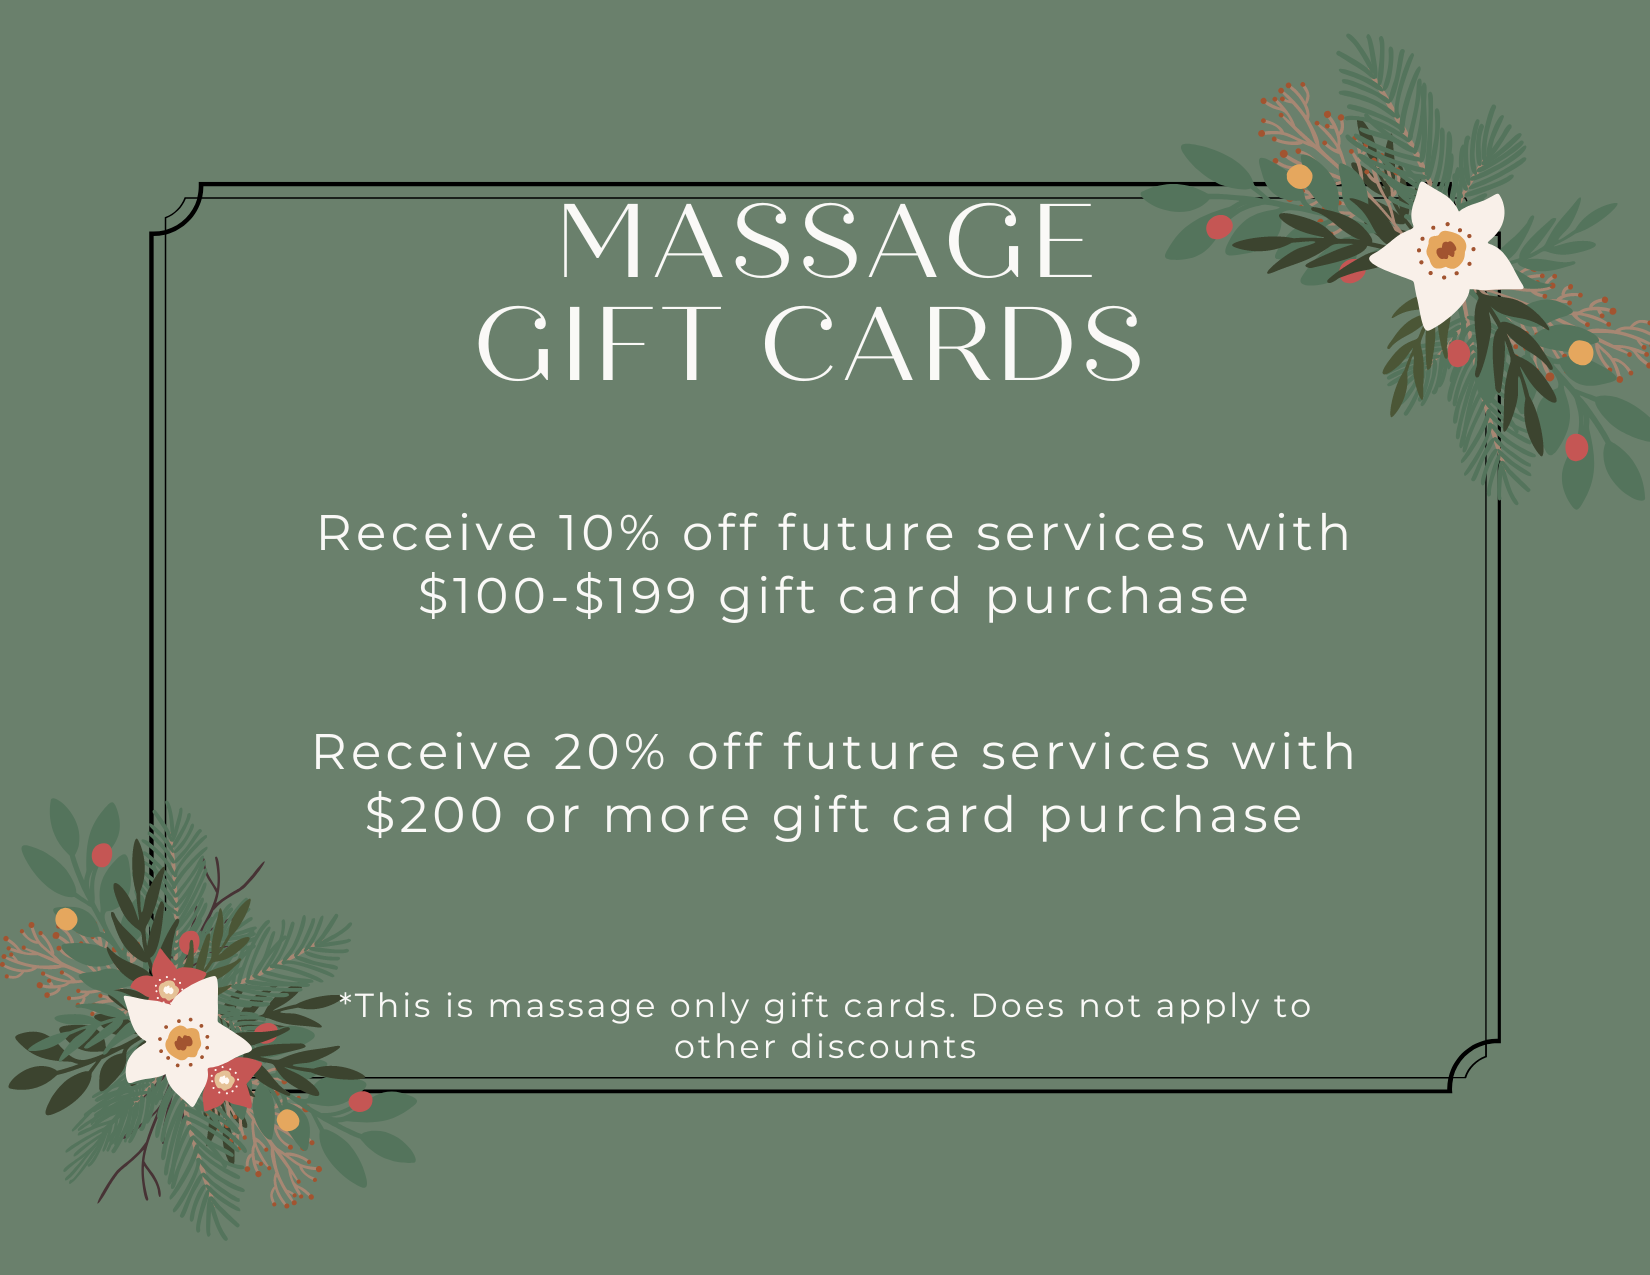 Massage Gift Card Specials